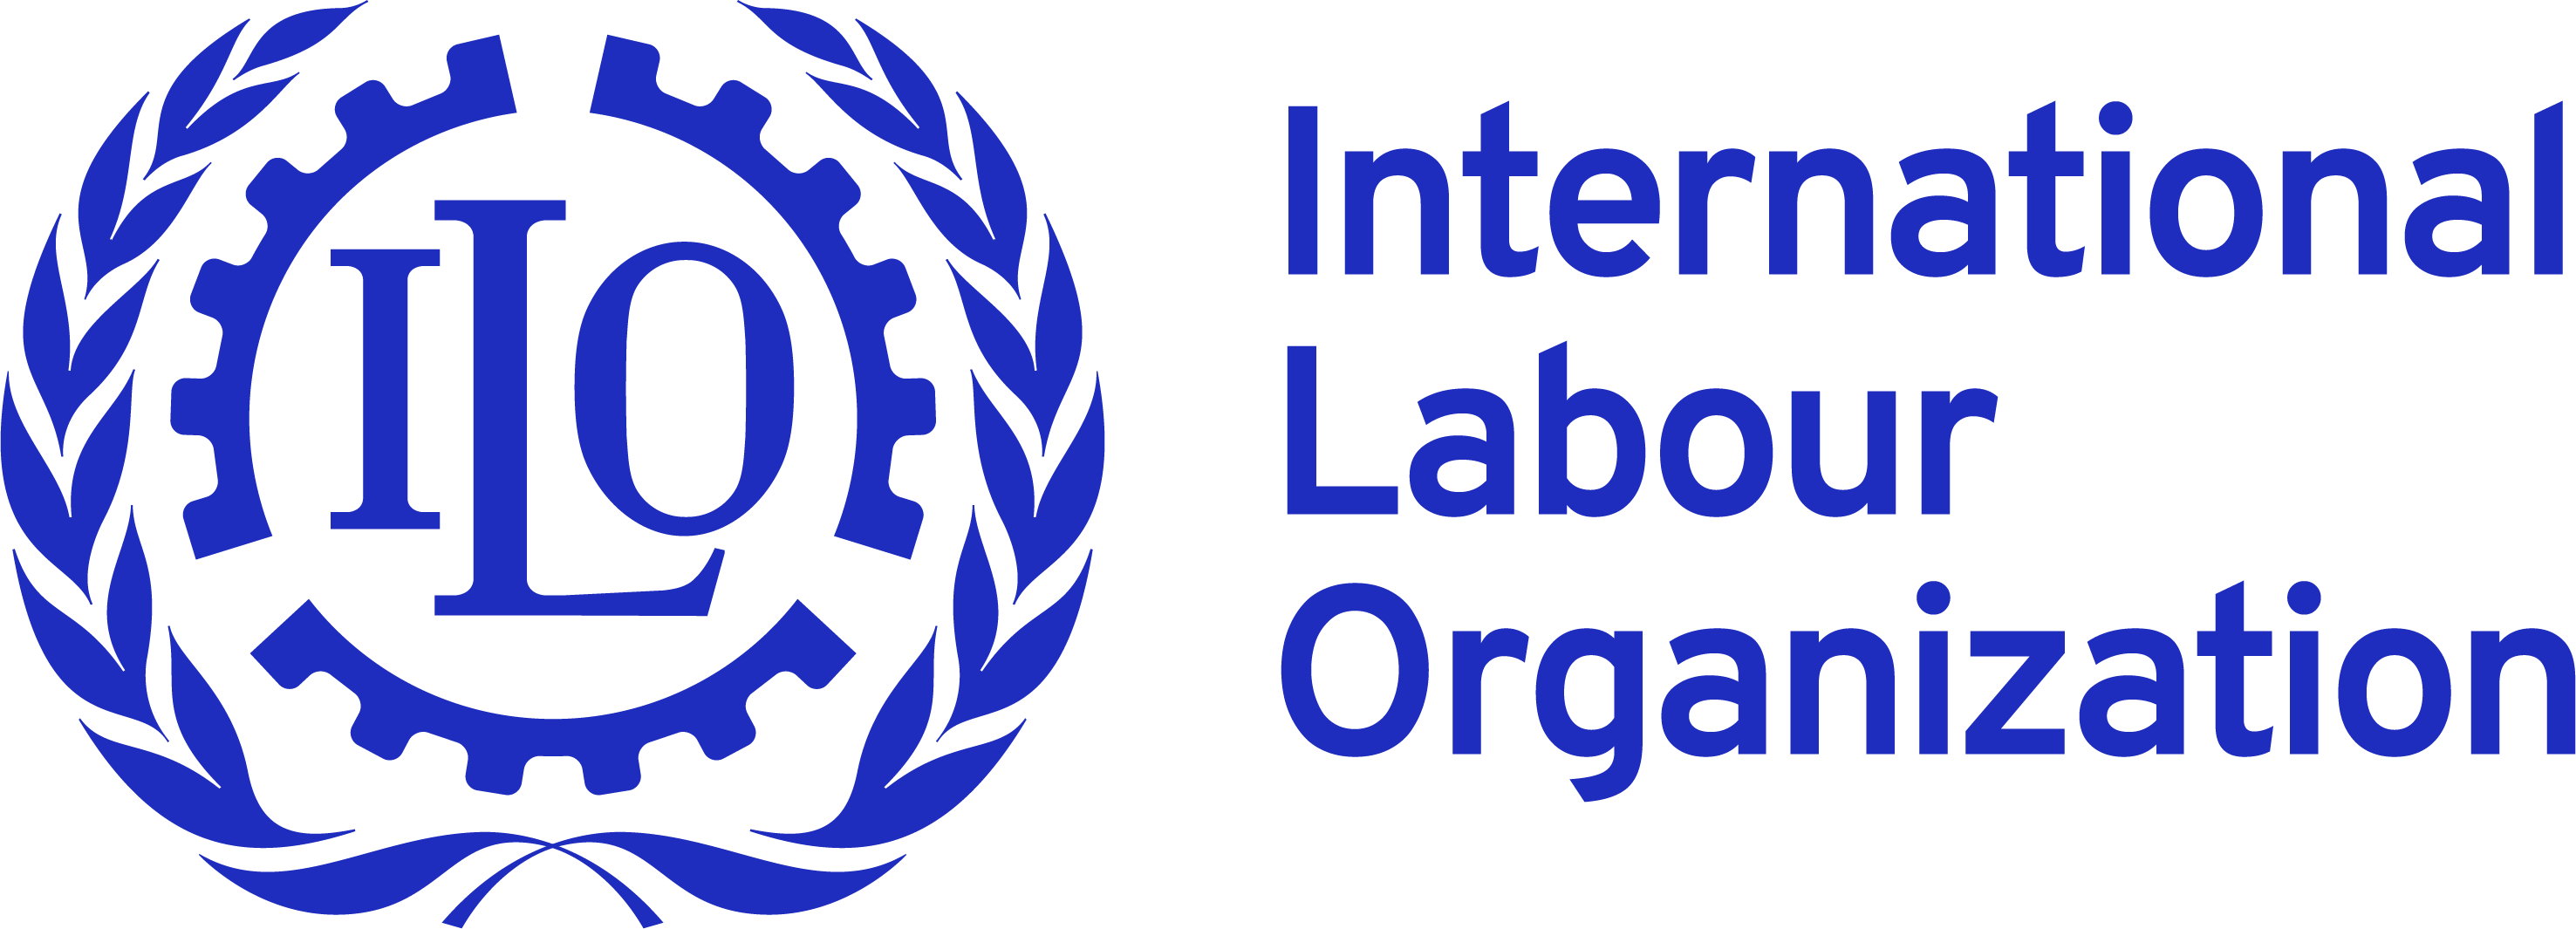 International Labour Organization response - Global Education Coalition